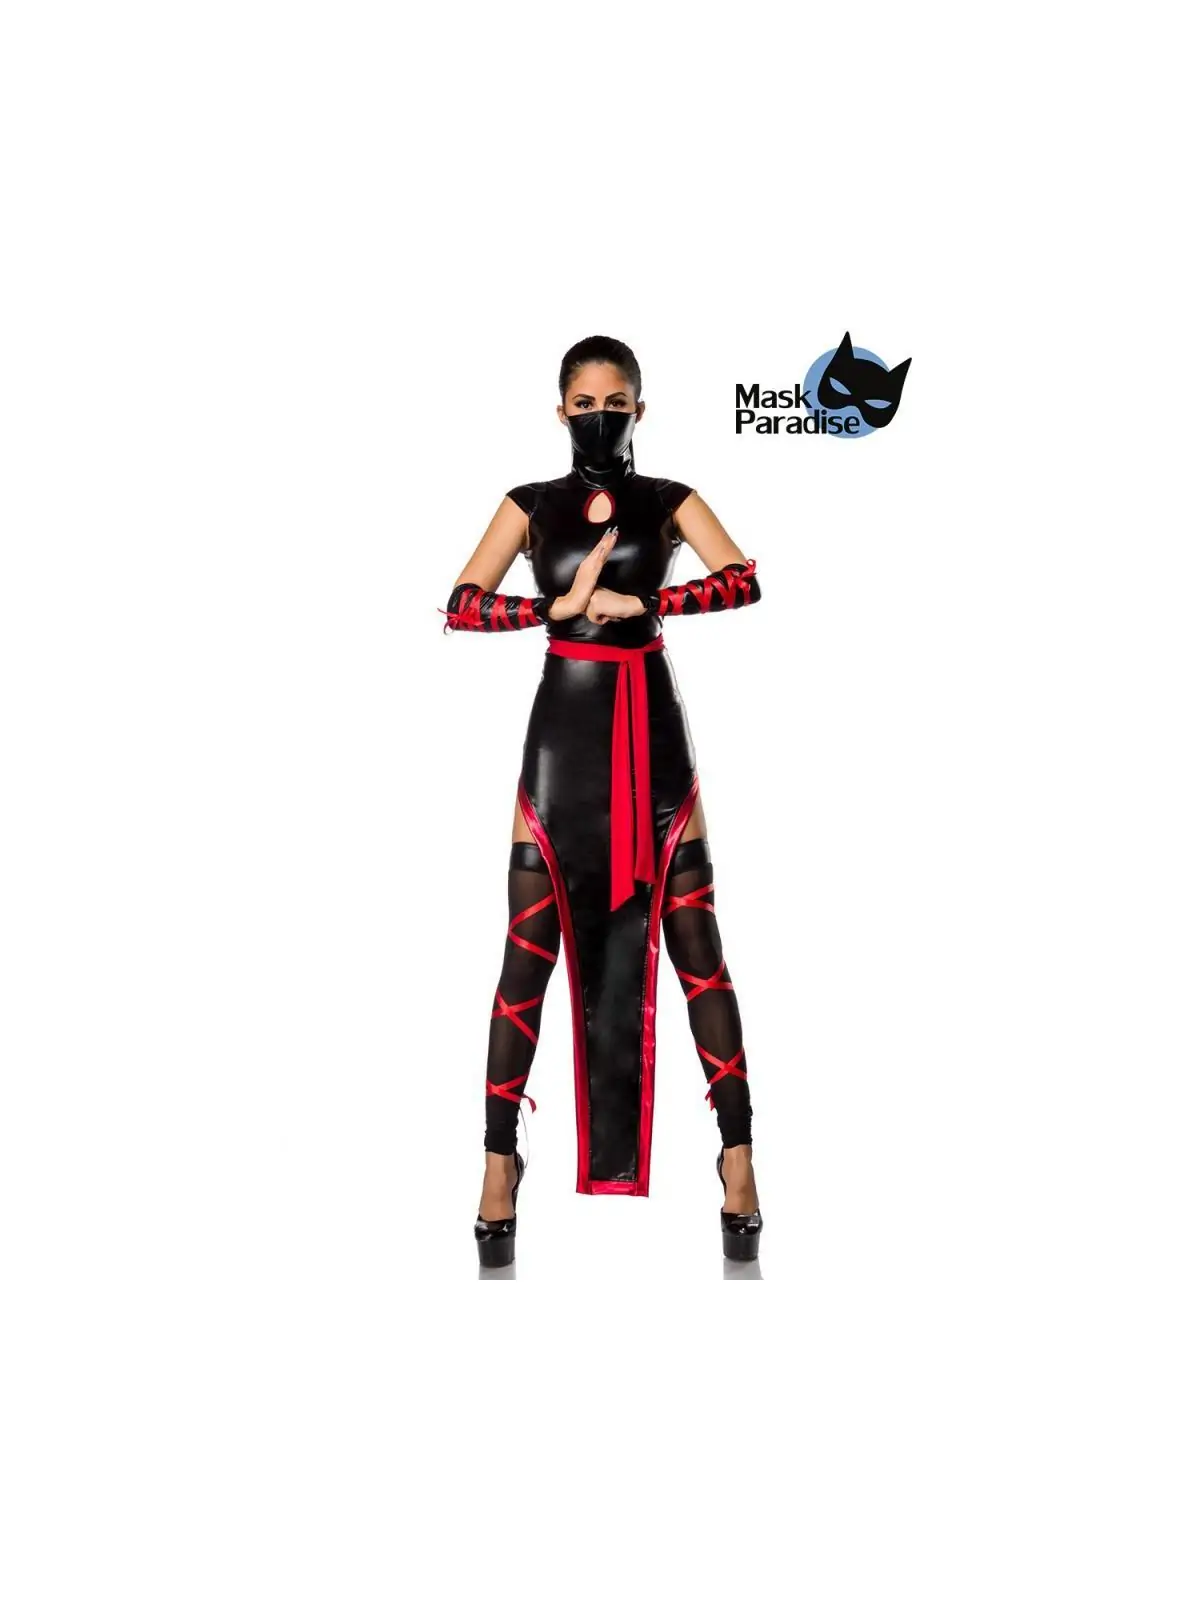 Ninjakostüm: Hot Ninja schwarz/rot von Mask Paradise